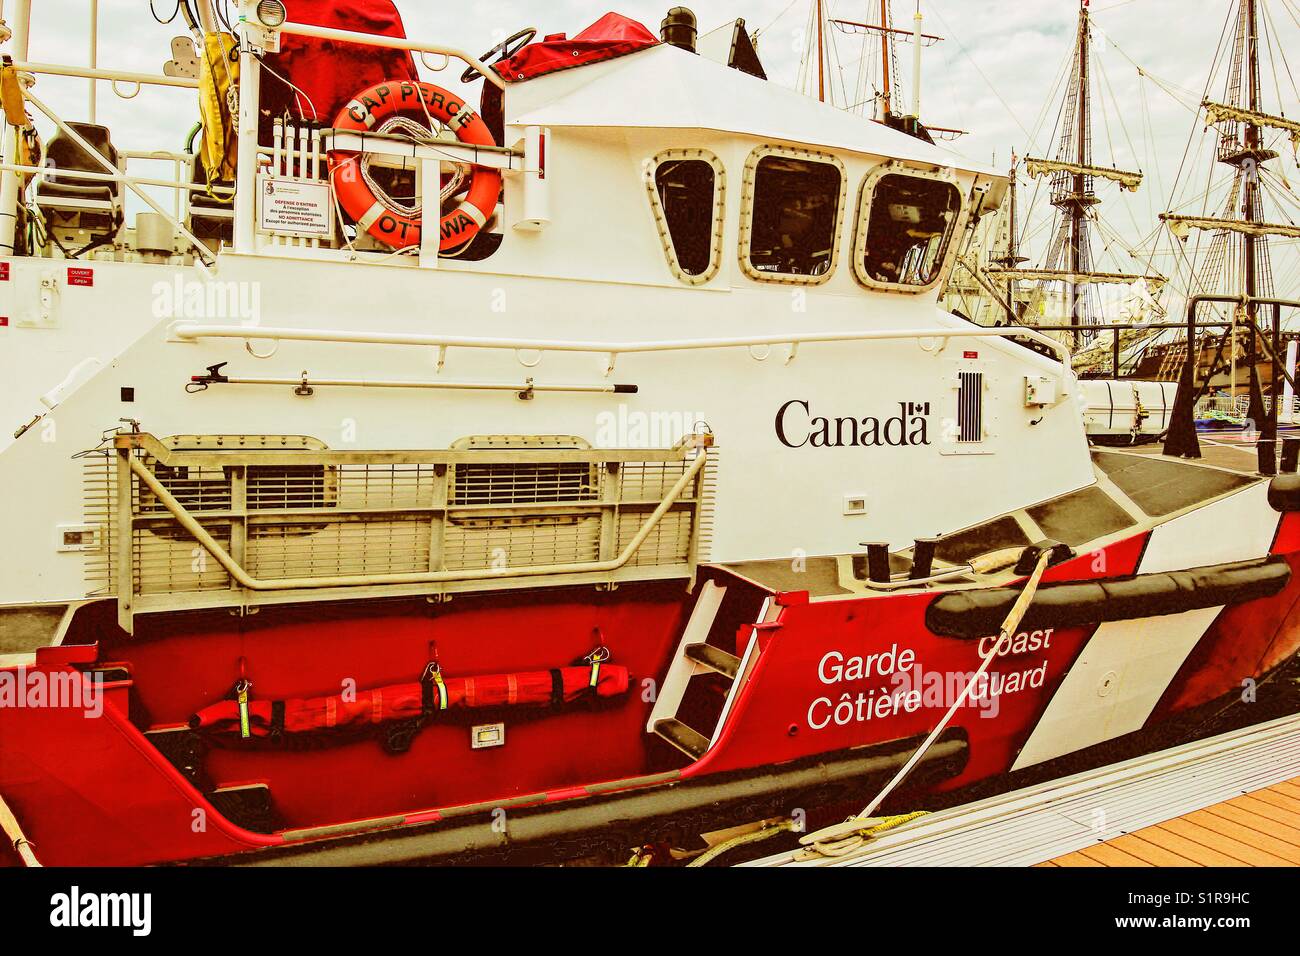 Canada coast guard patrol boat,Newfoundland, Canada Stock Photo